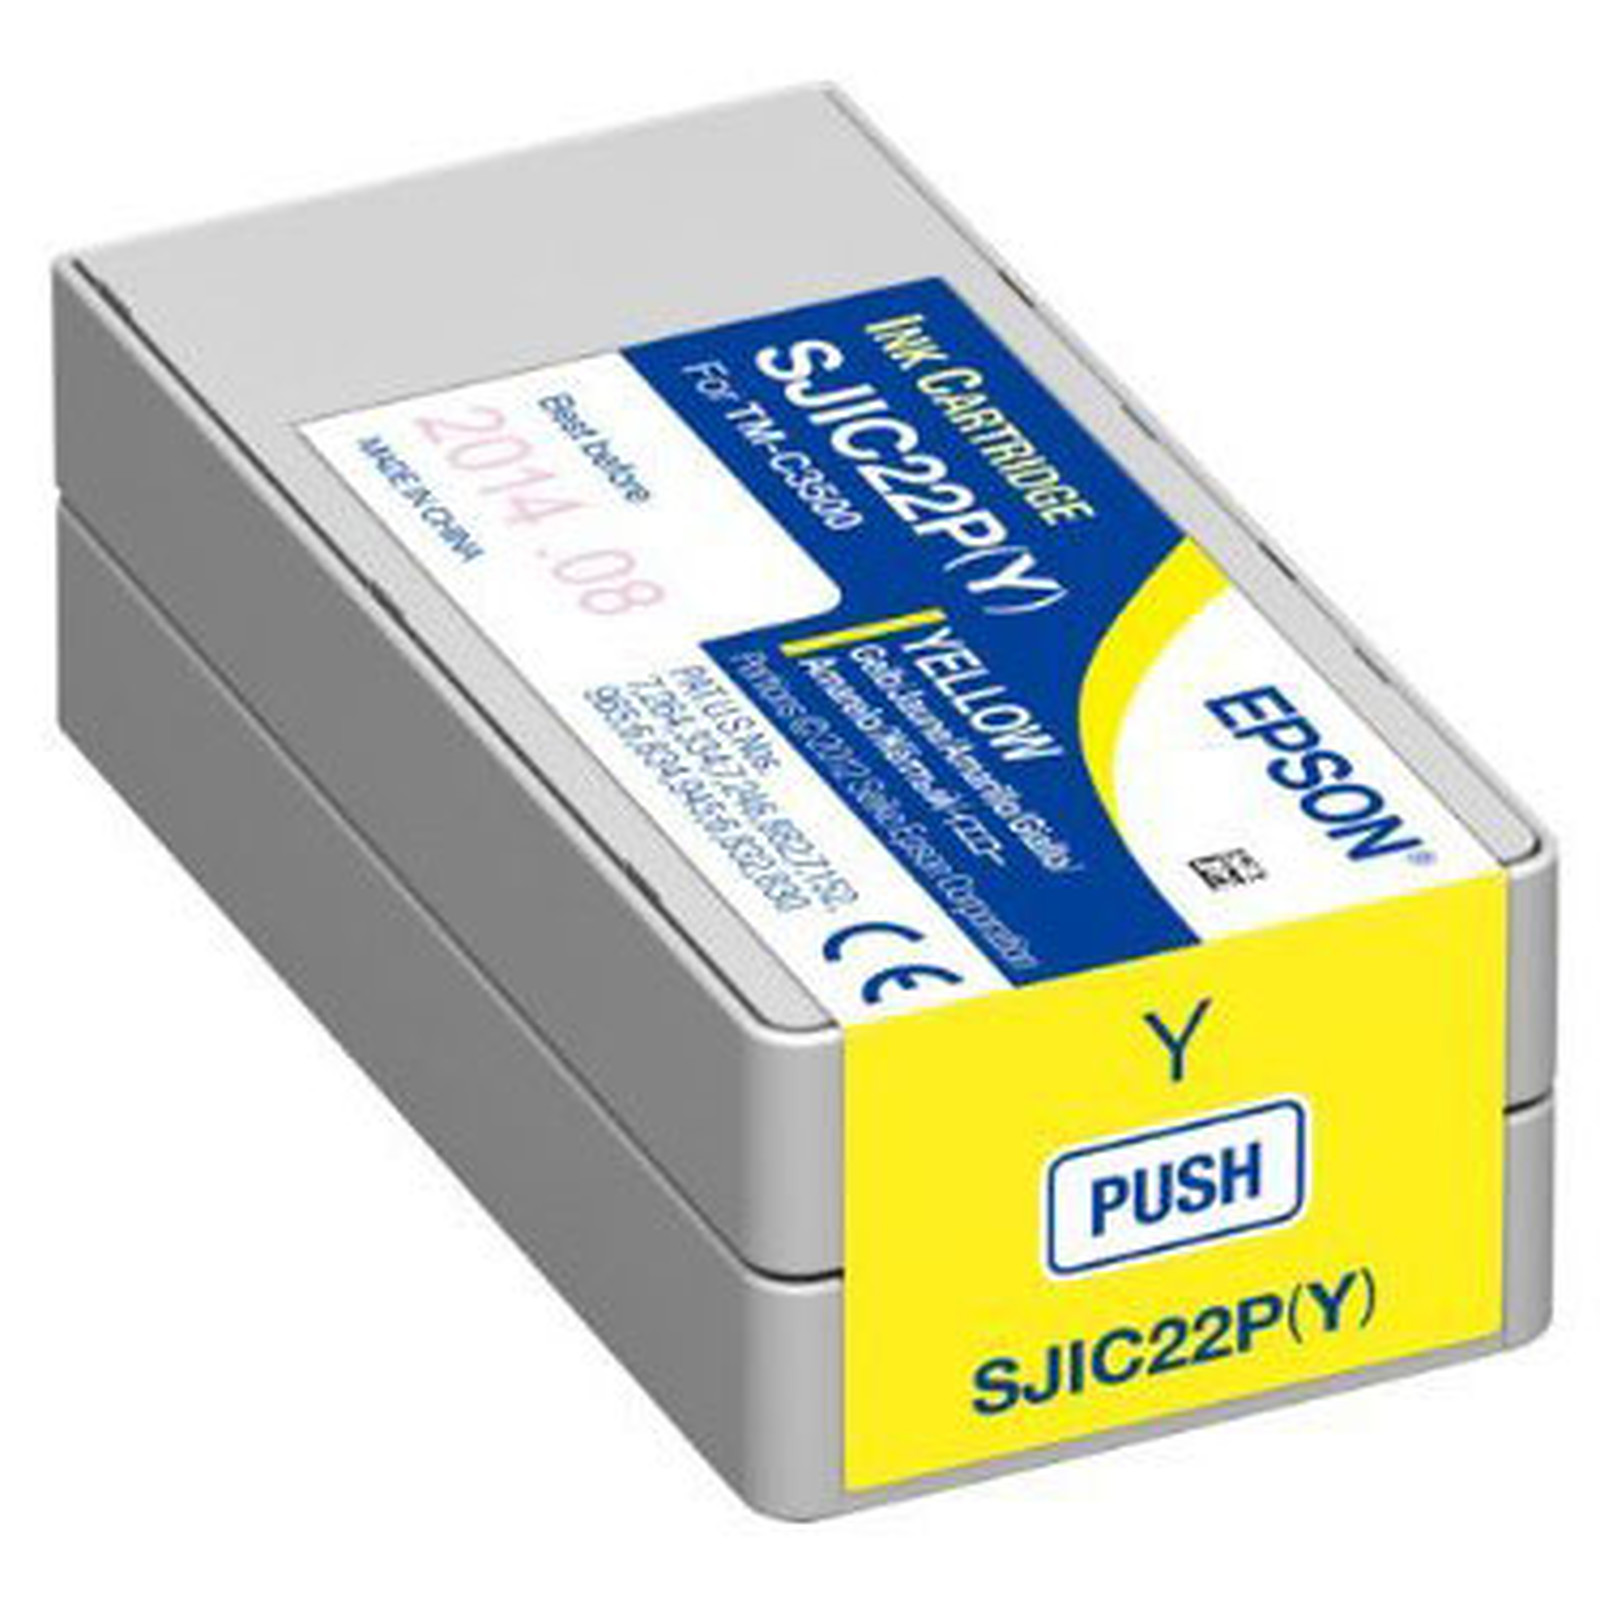 Epson SJIC22P(Y) - Cartouche imprimante Epson